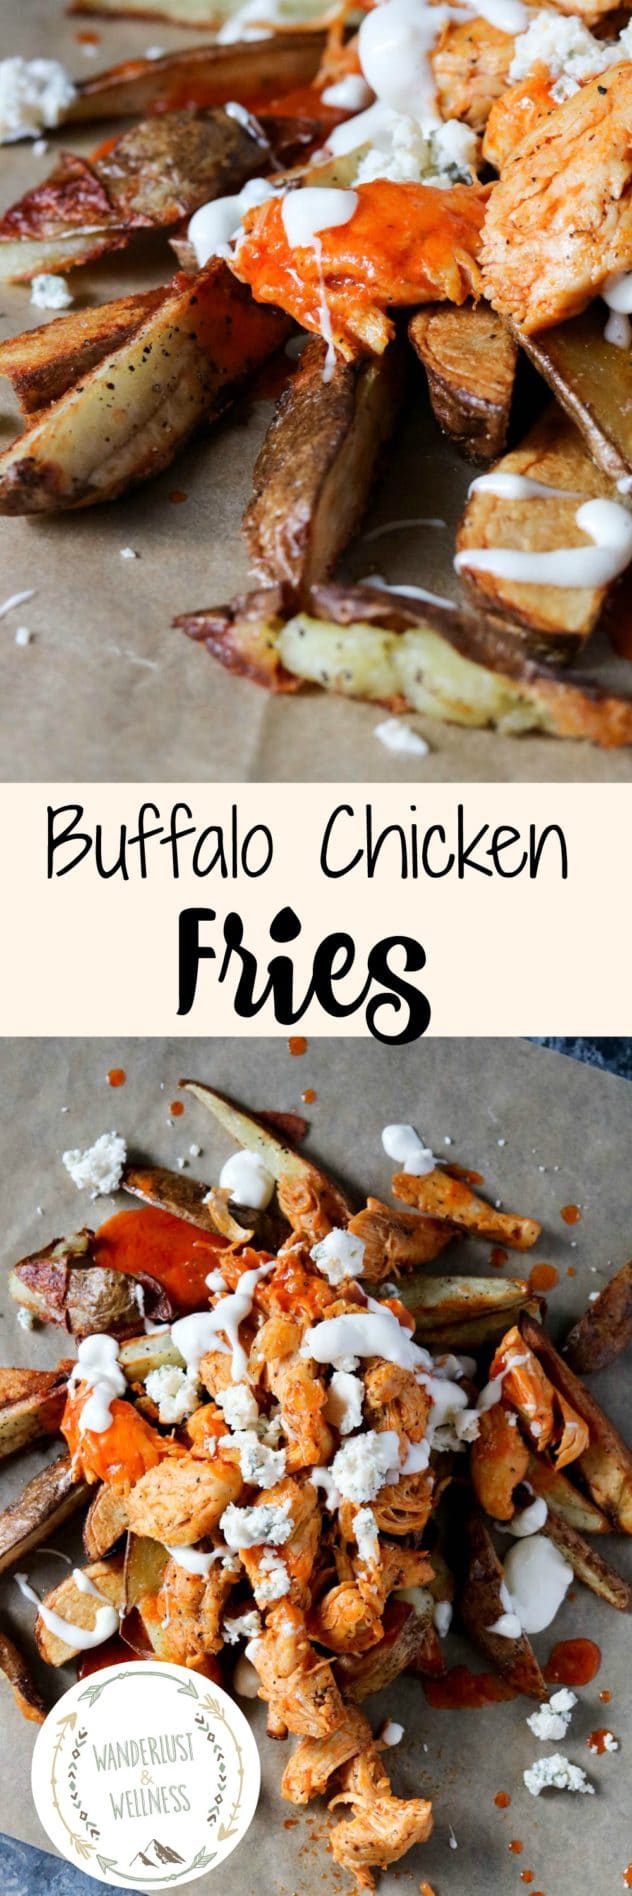 Homemade Buffalo Chicken Fries